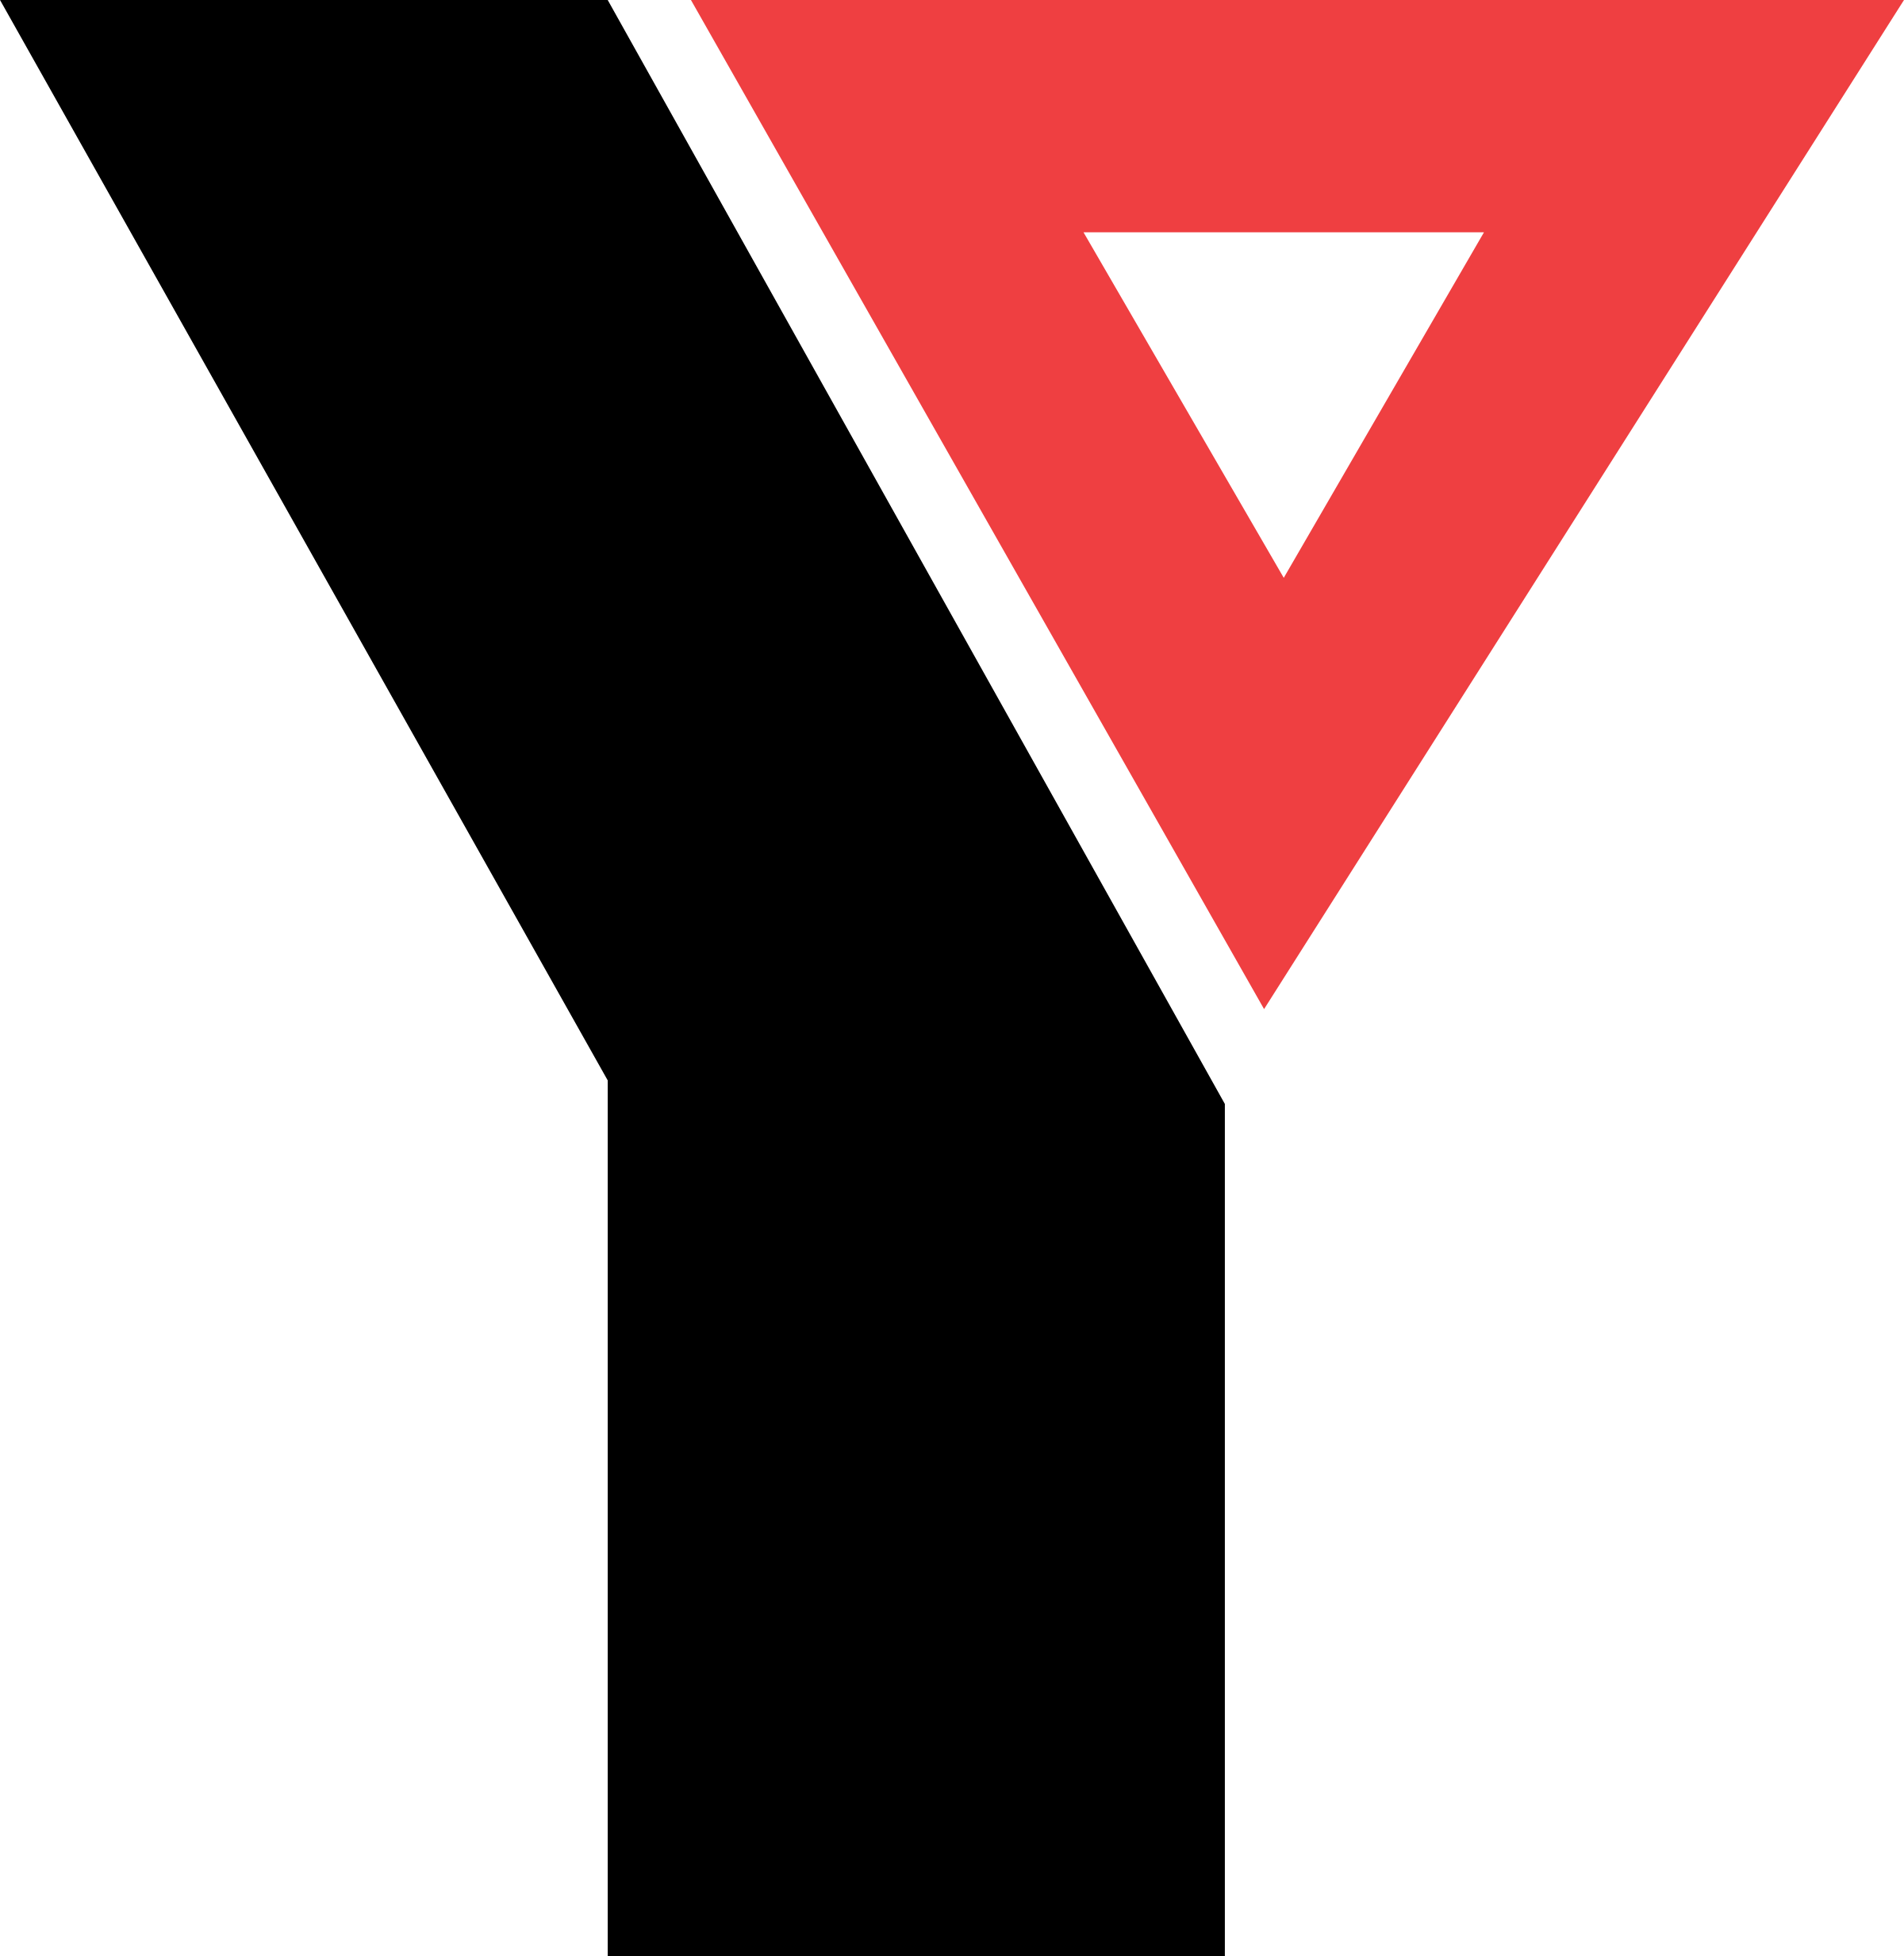 ymca-2-logo-png-transparent